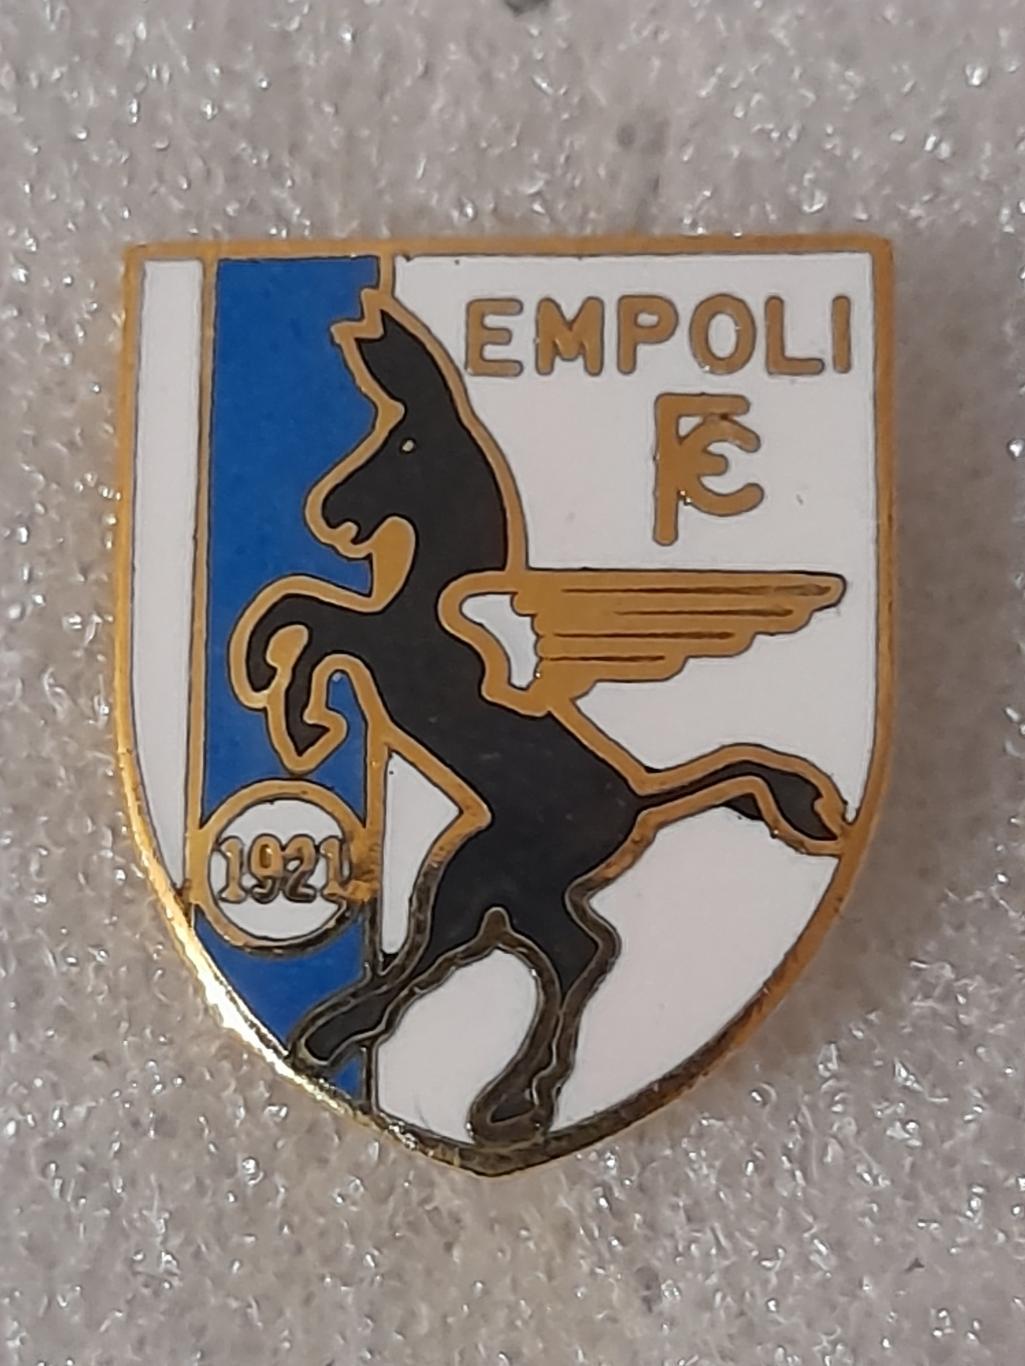 ФК Эмполи ( Италия)/FC Empoli, Italy